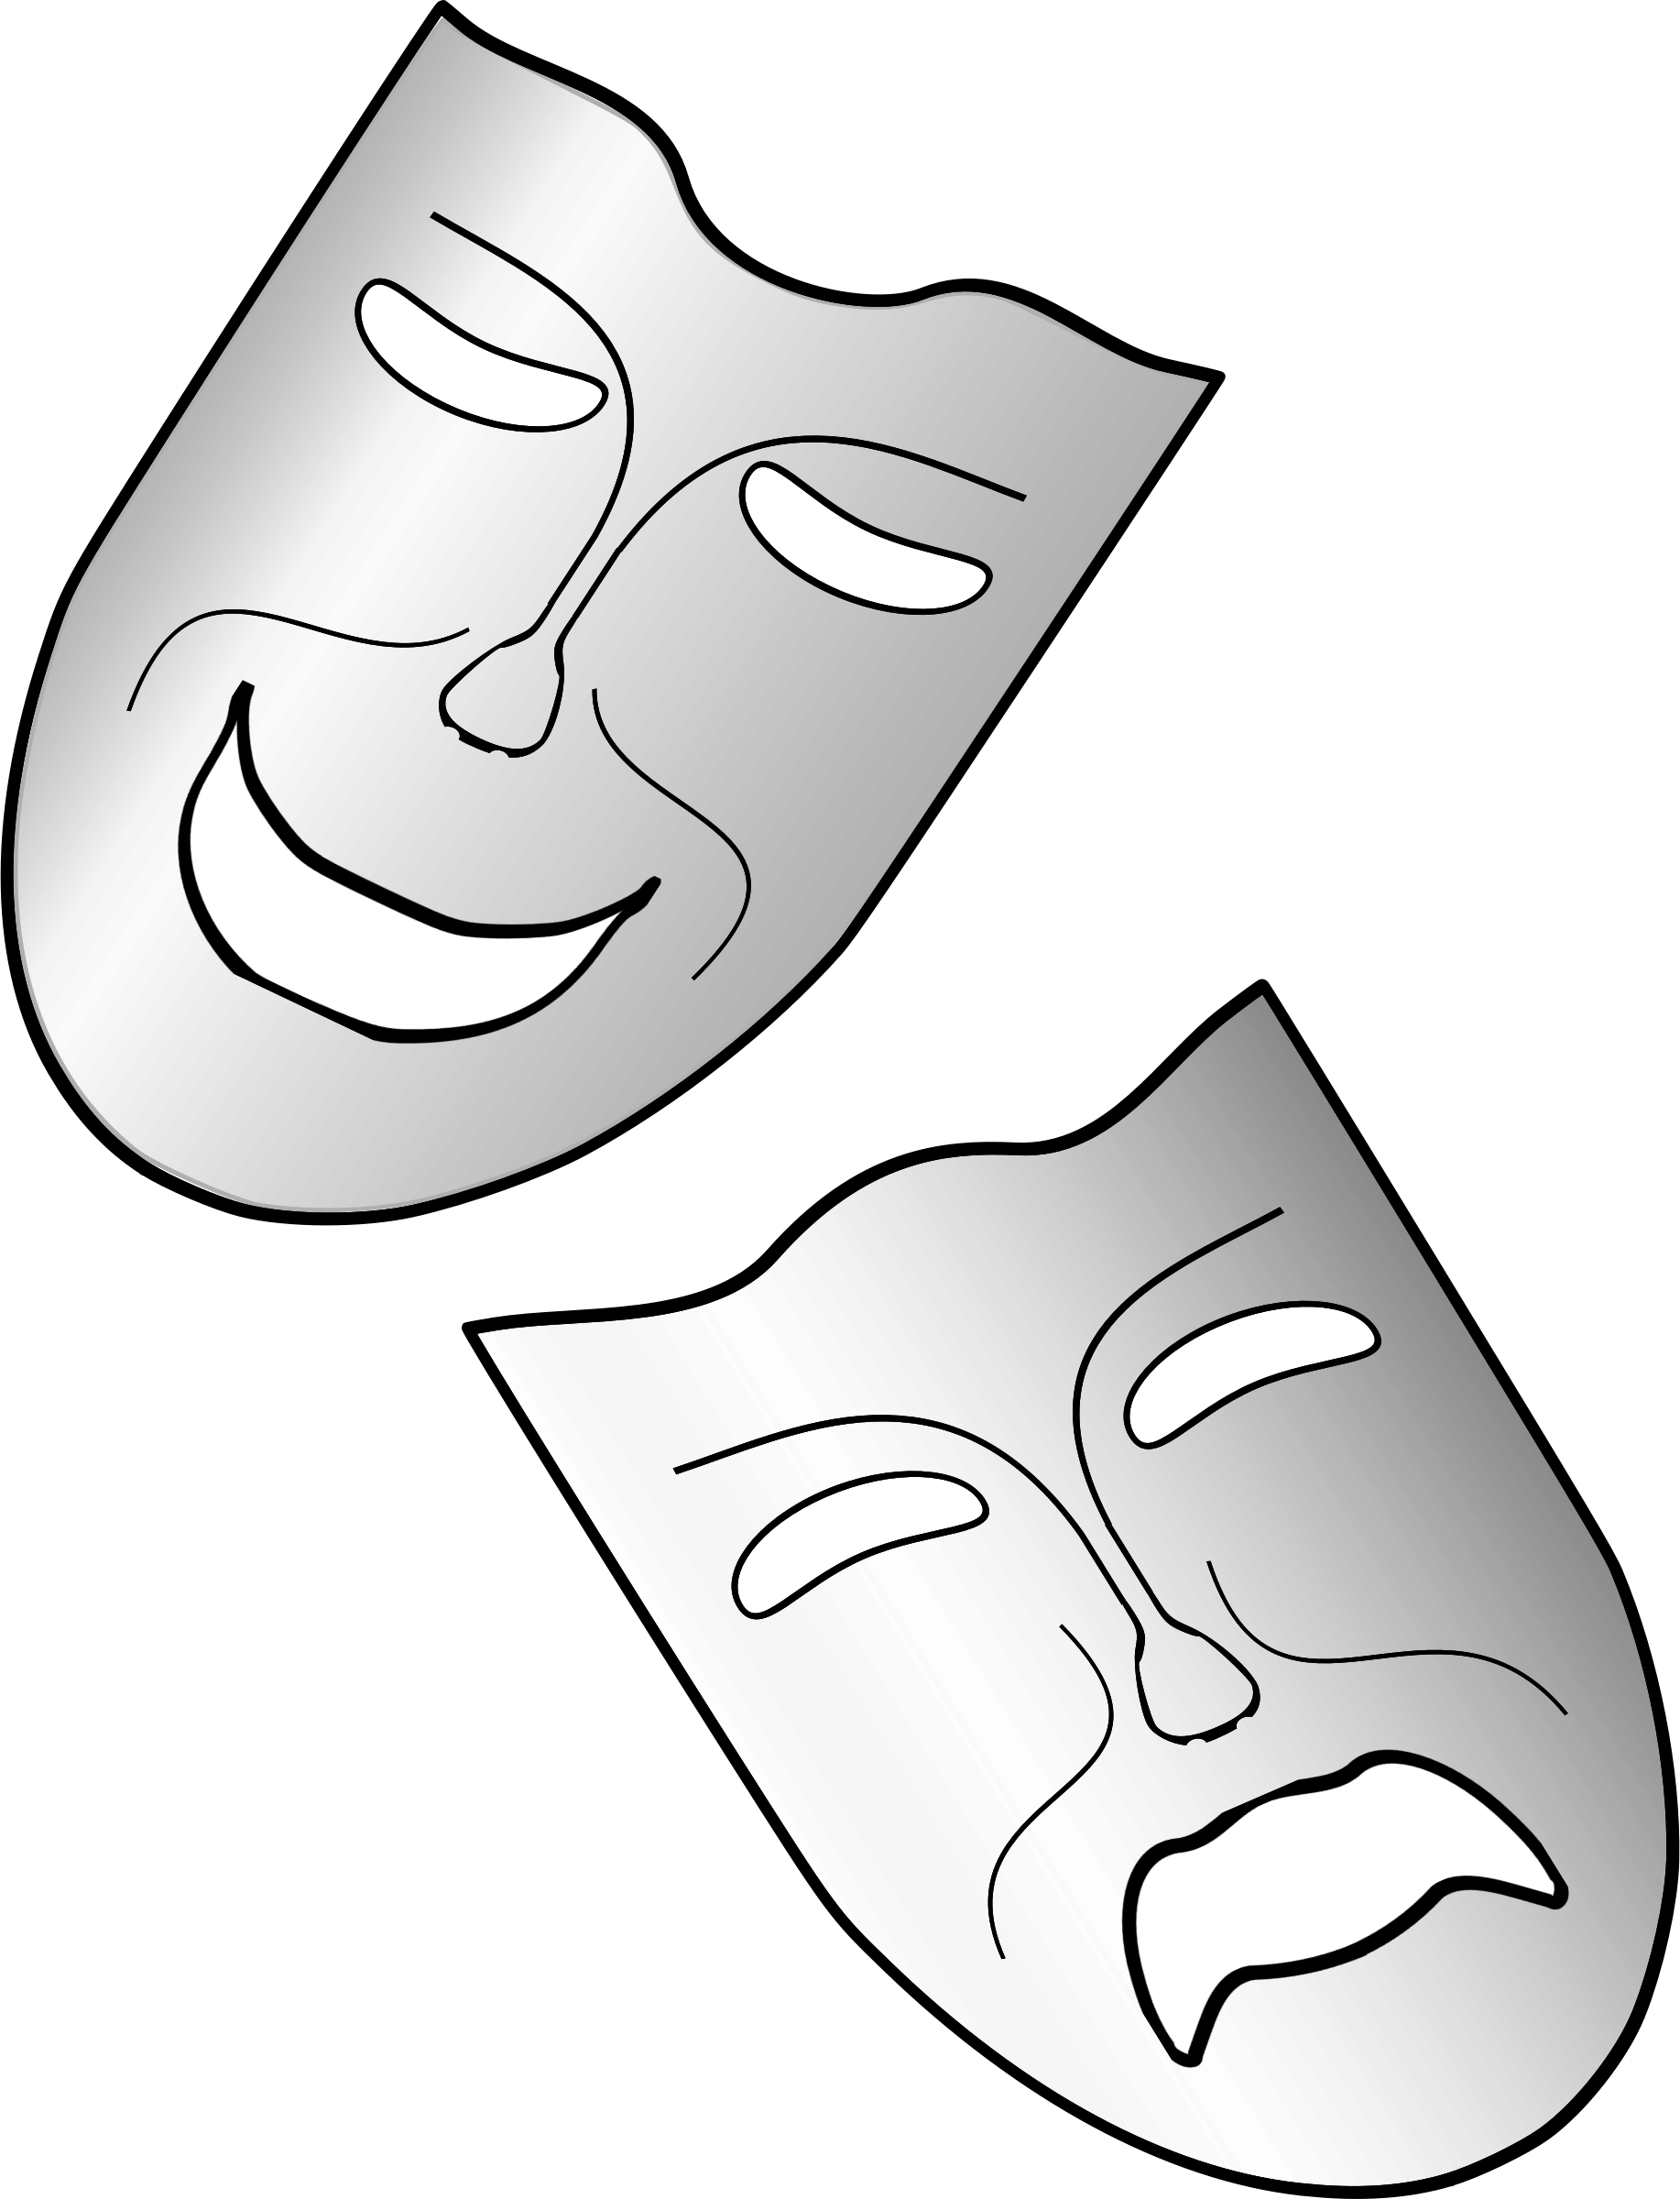 Театральные маски. Театральная маска трафарет. Театральная маска раскраска. Театральные маски раскраски для детей. Театральная маска для печати